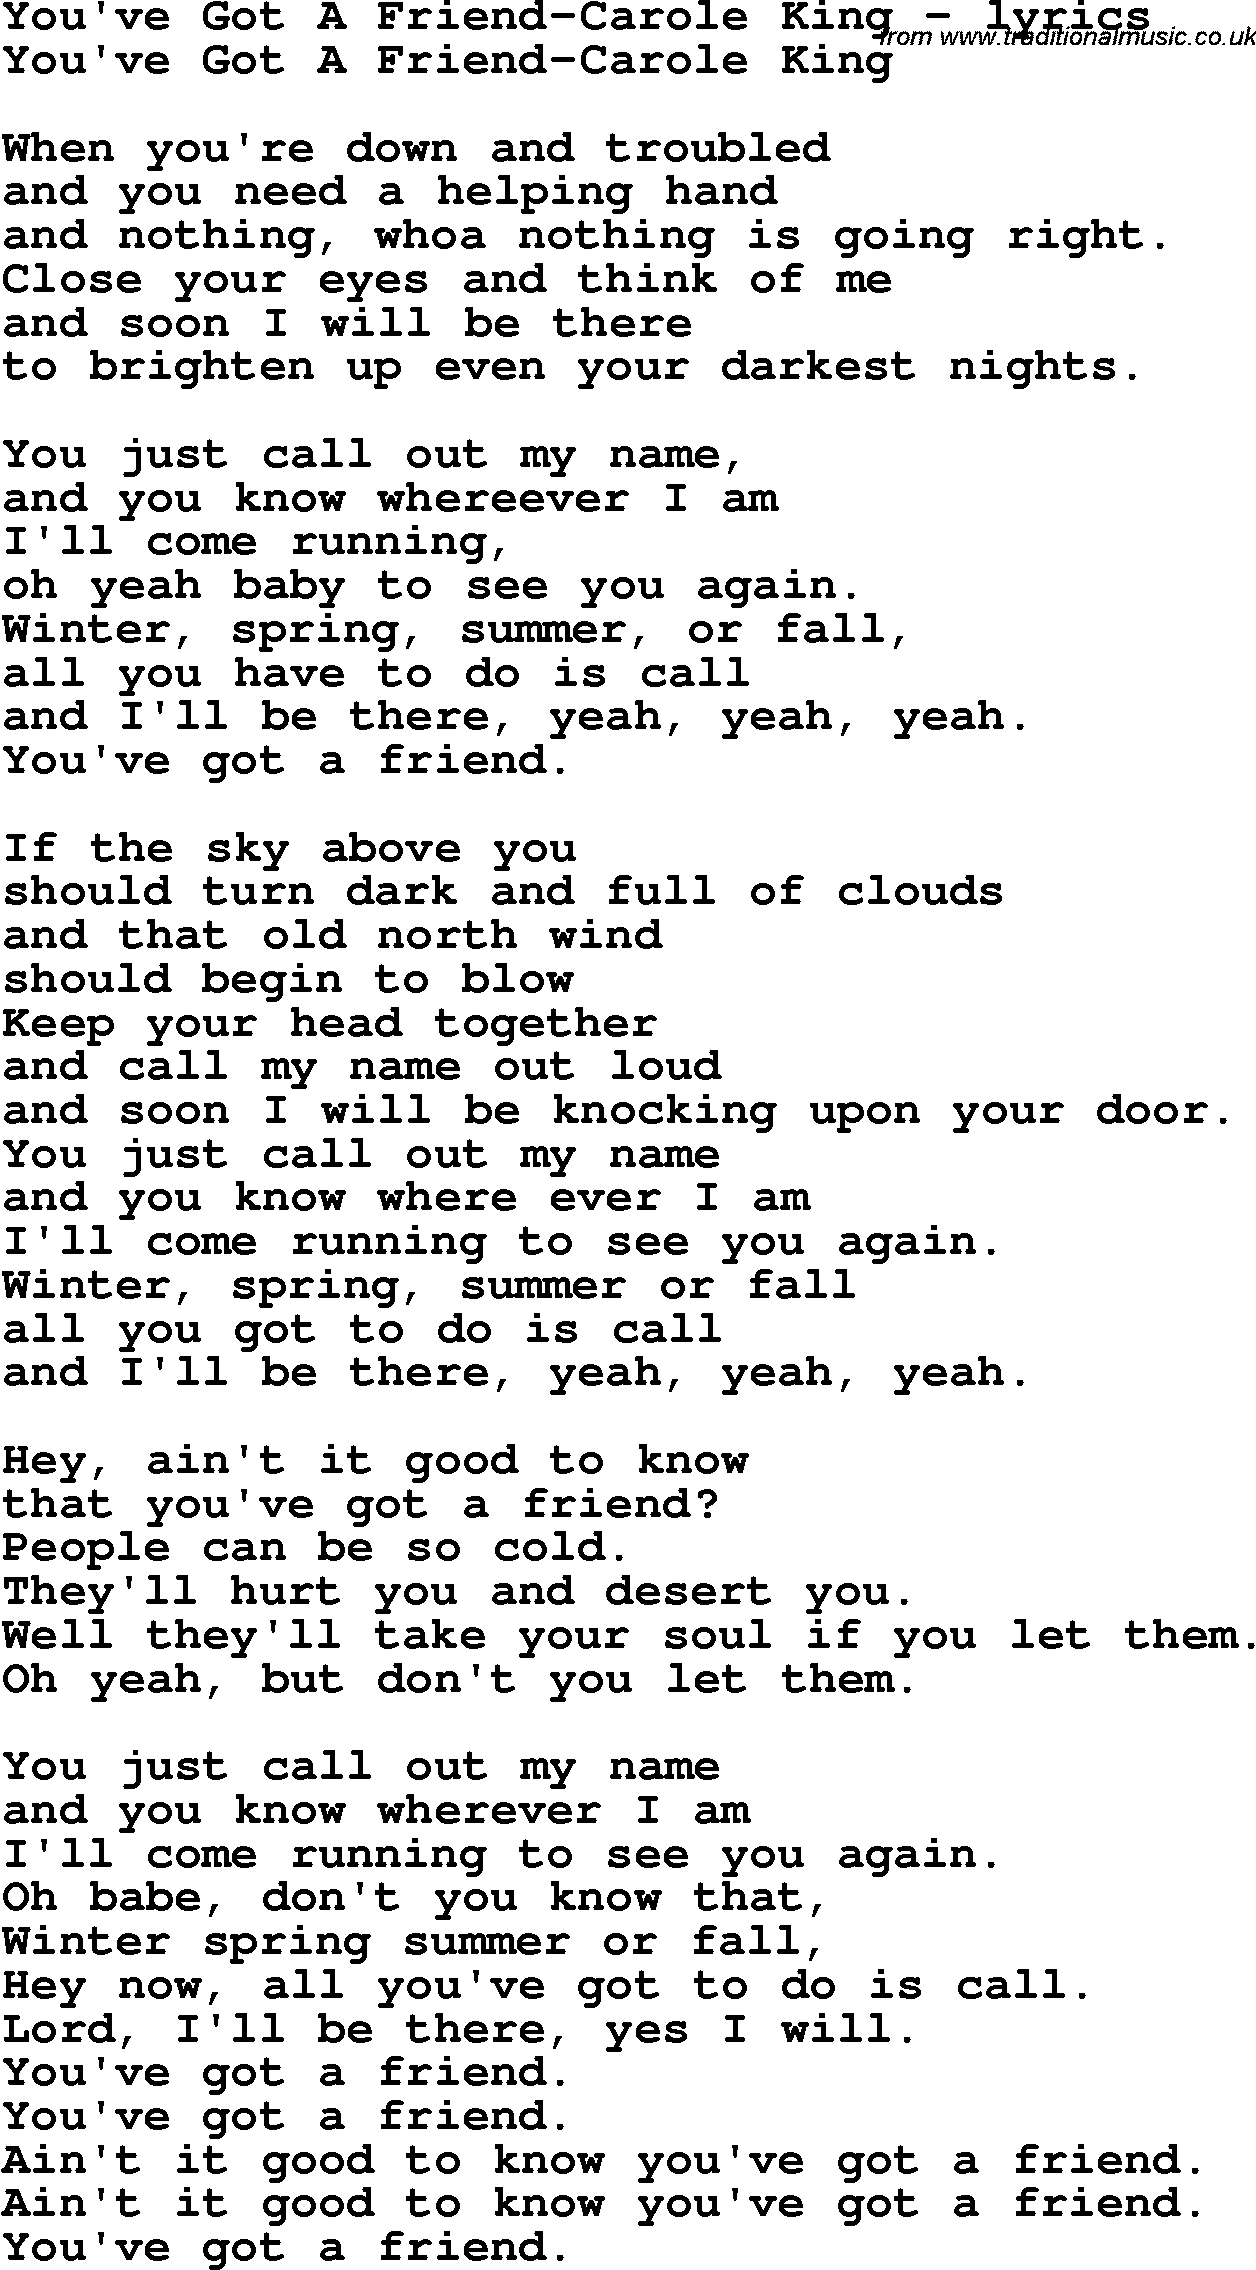 Love Song Lyrics for: You've Got A Friend-Carole King